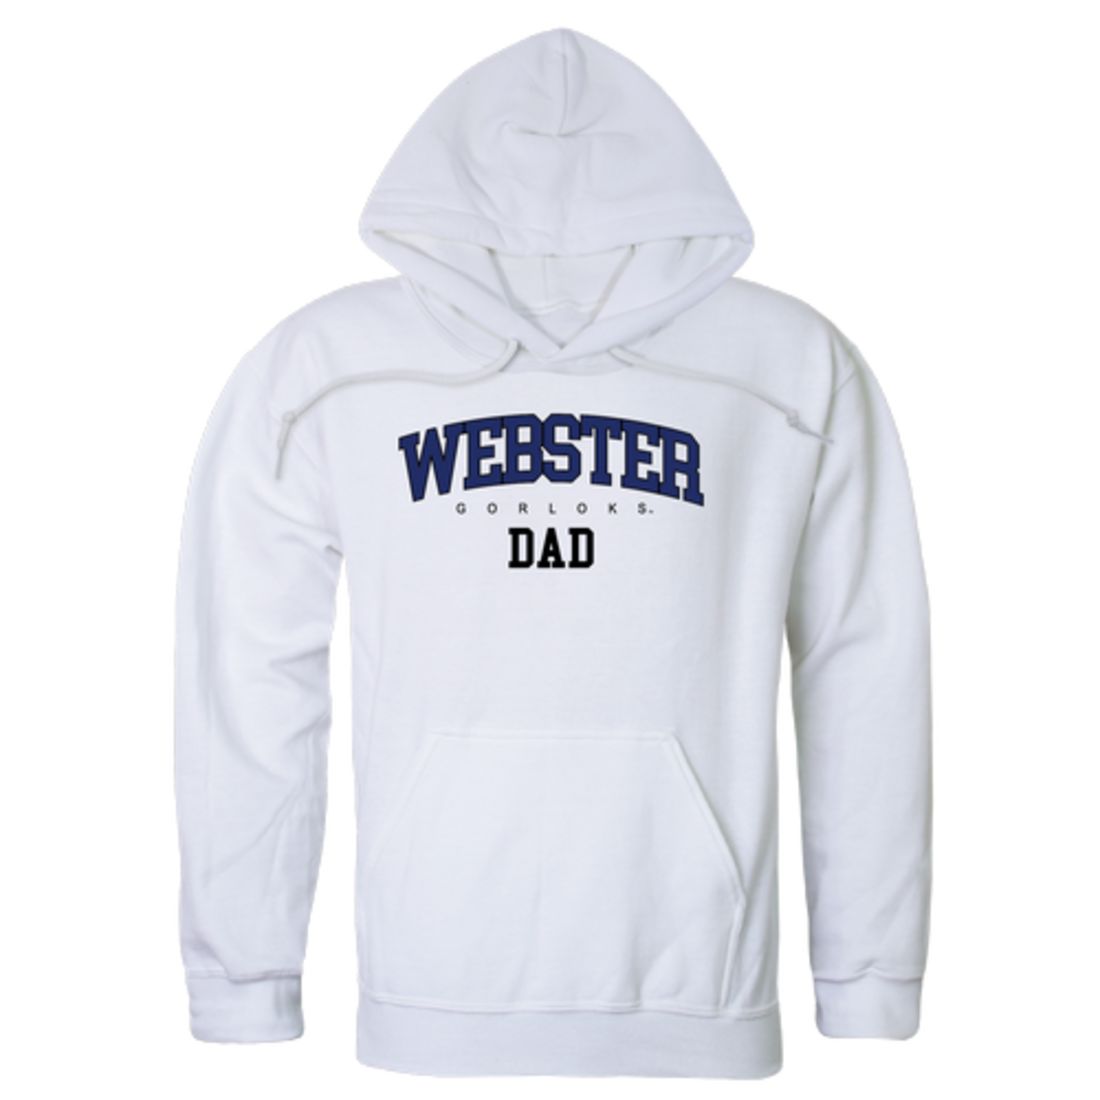 Webster-University-Gorlocks-Dad-Fleece-Hoodie-Sweatshirts